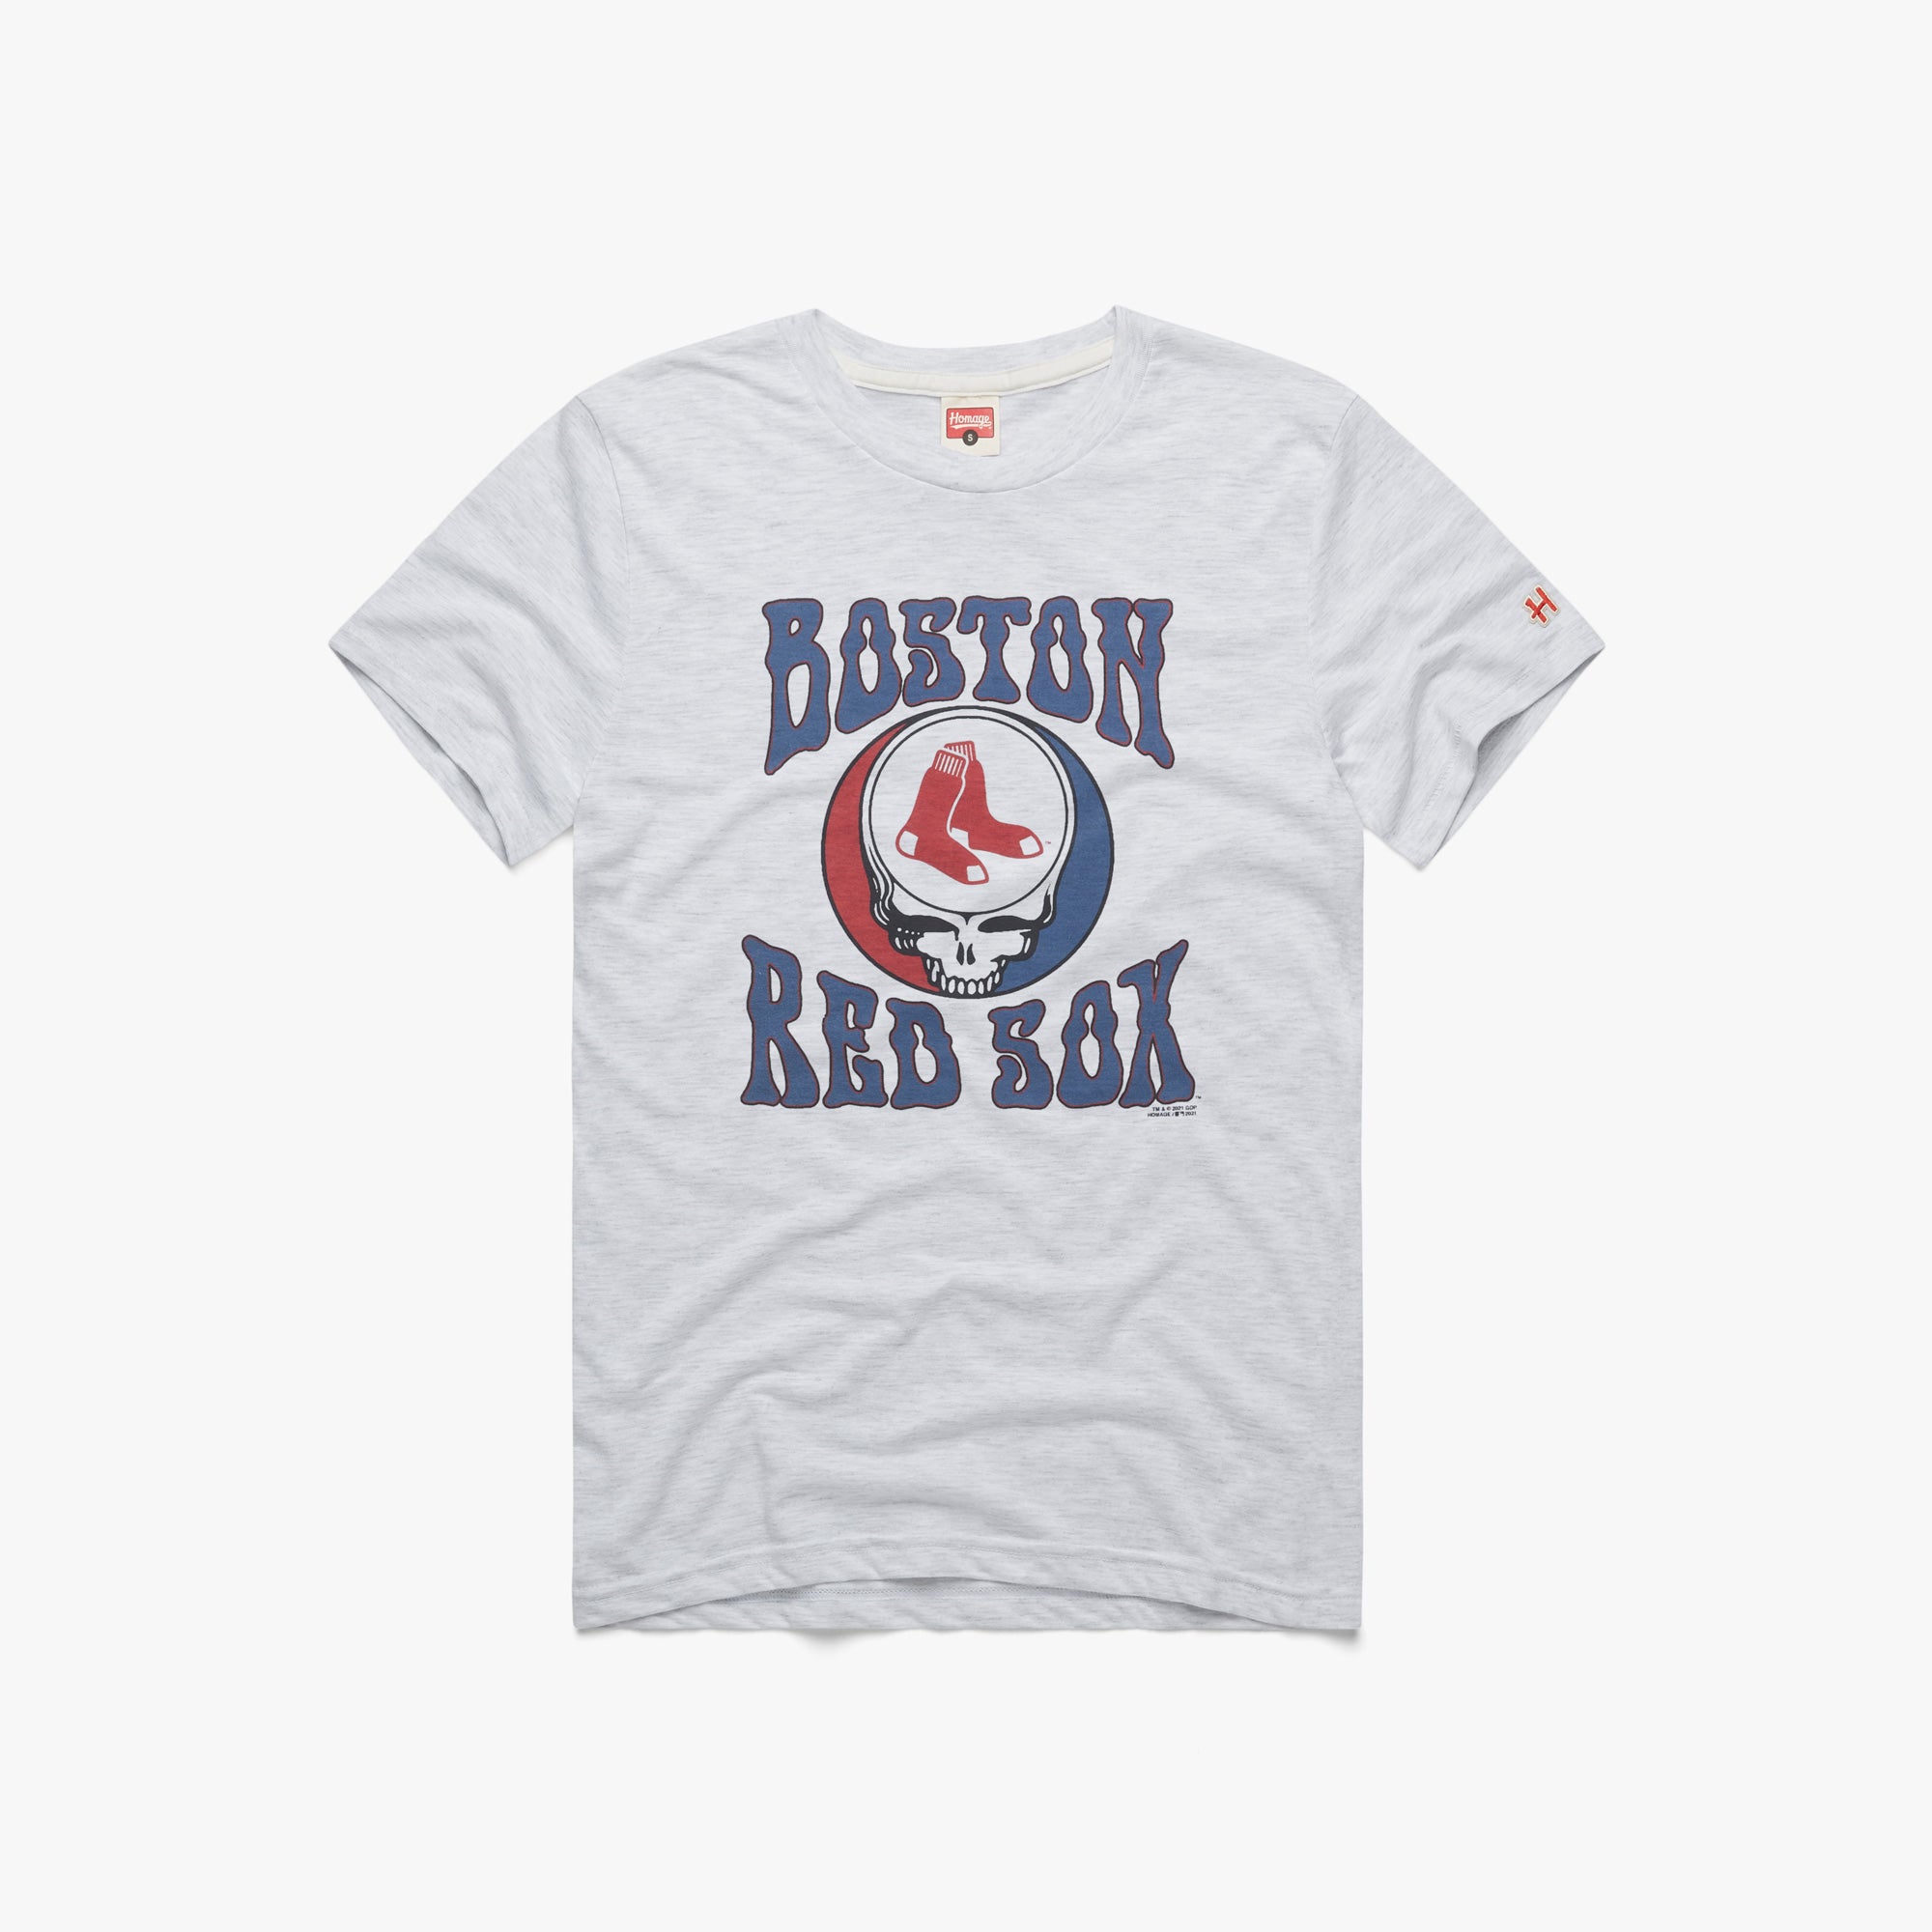 Original Grateful Dead Boston Red Sox Steal Your Base T-shirt